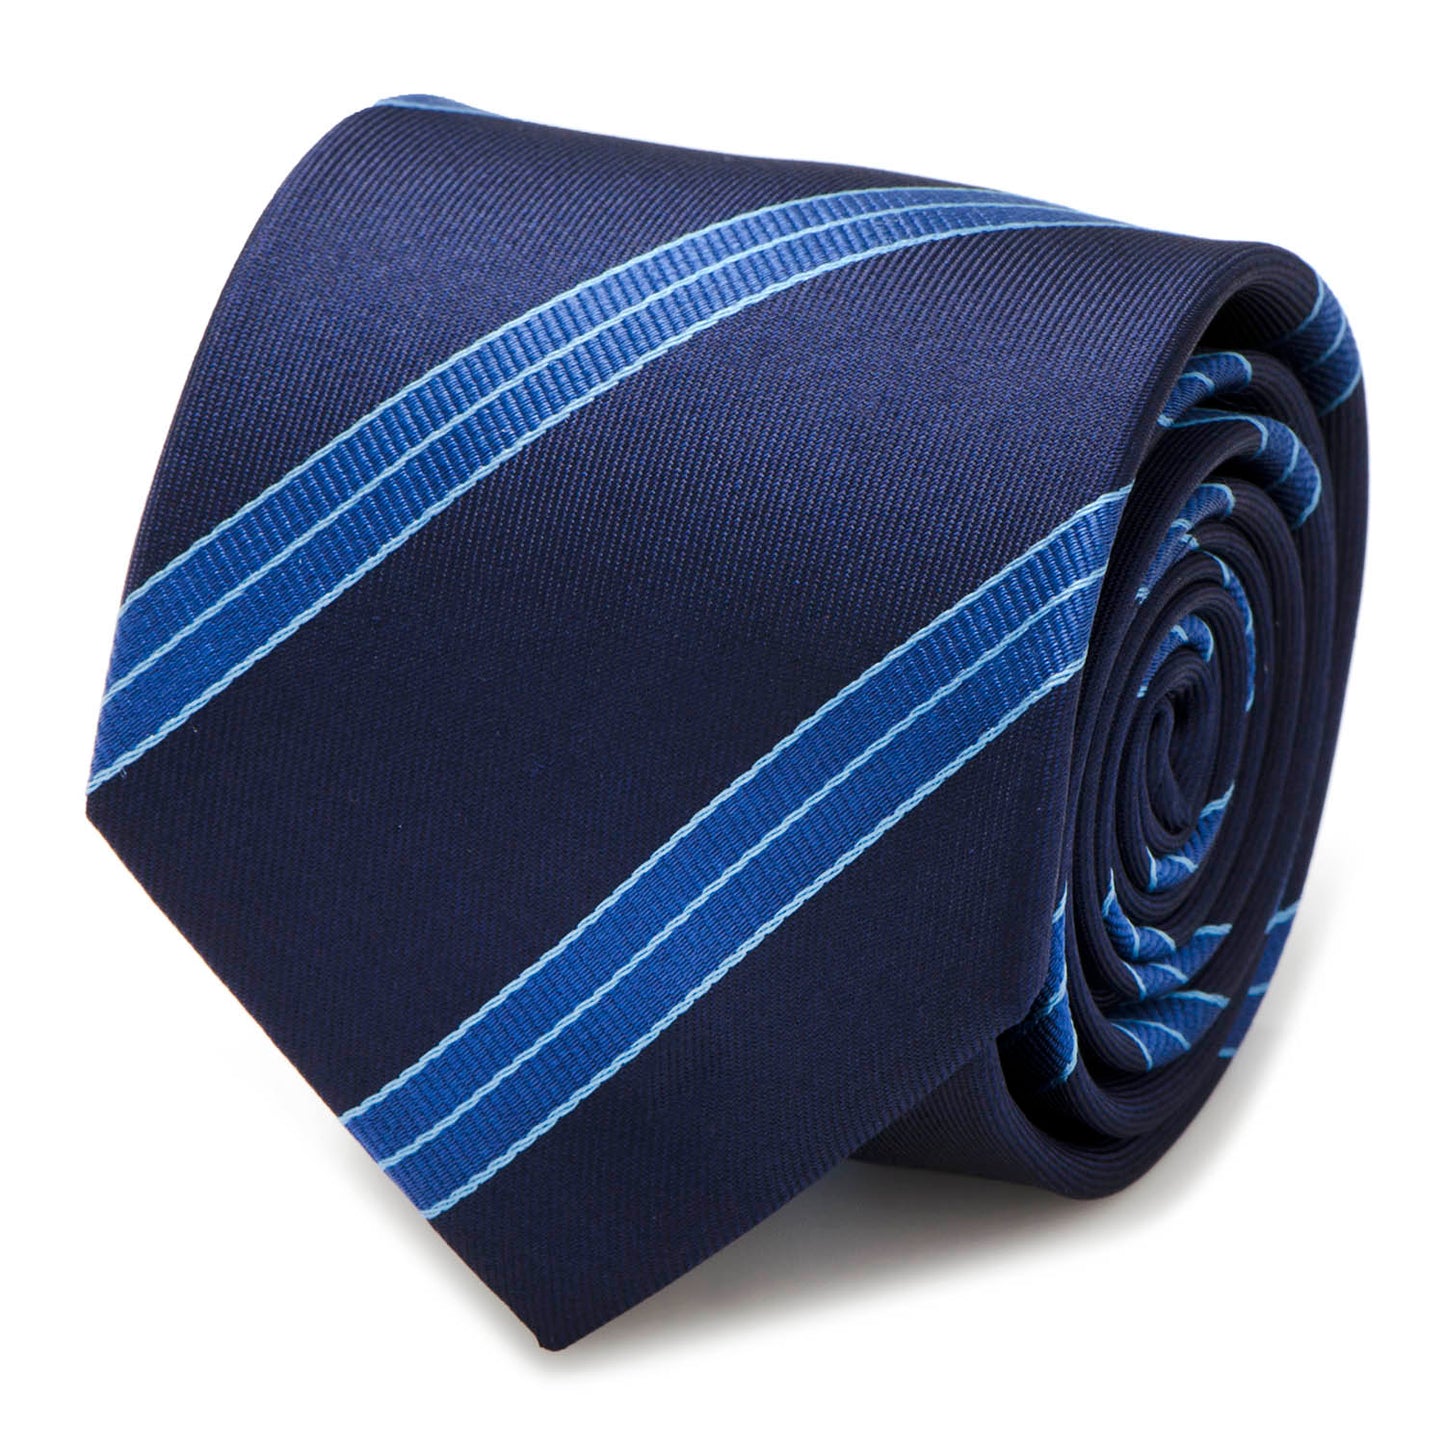 Star Trek Enterprise Flight Blue Stripe Herren's Krawatte